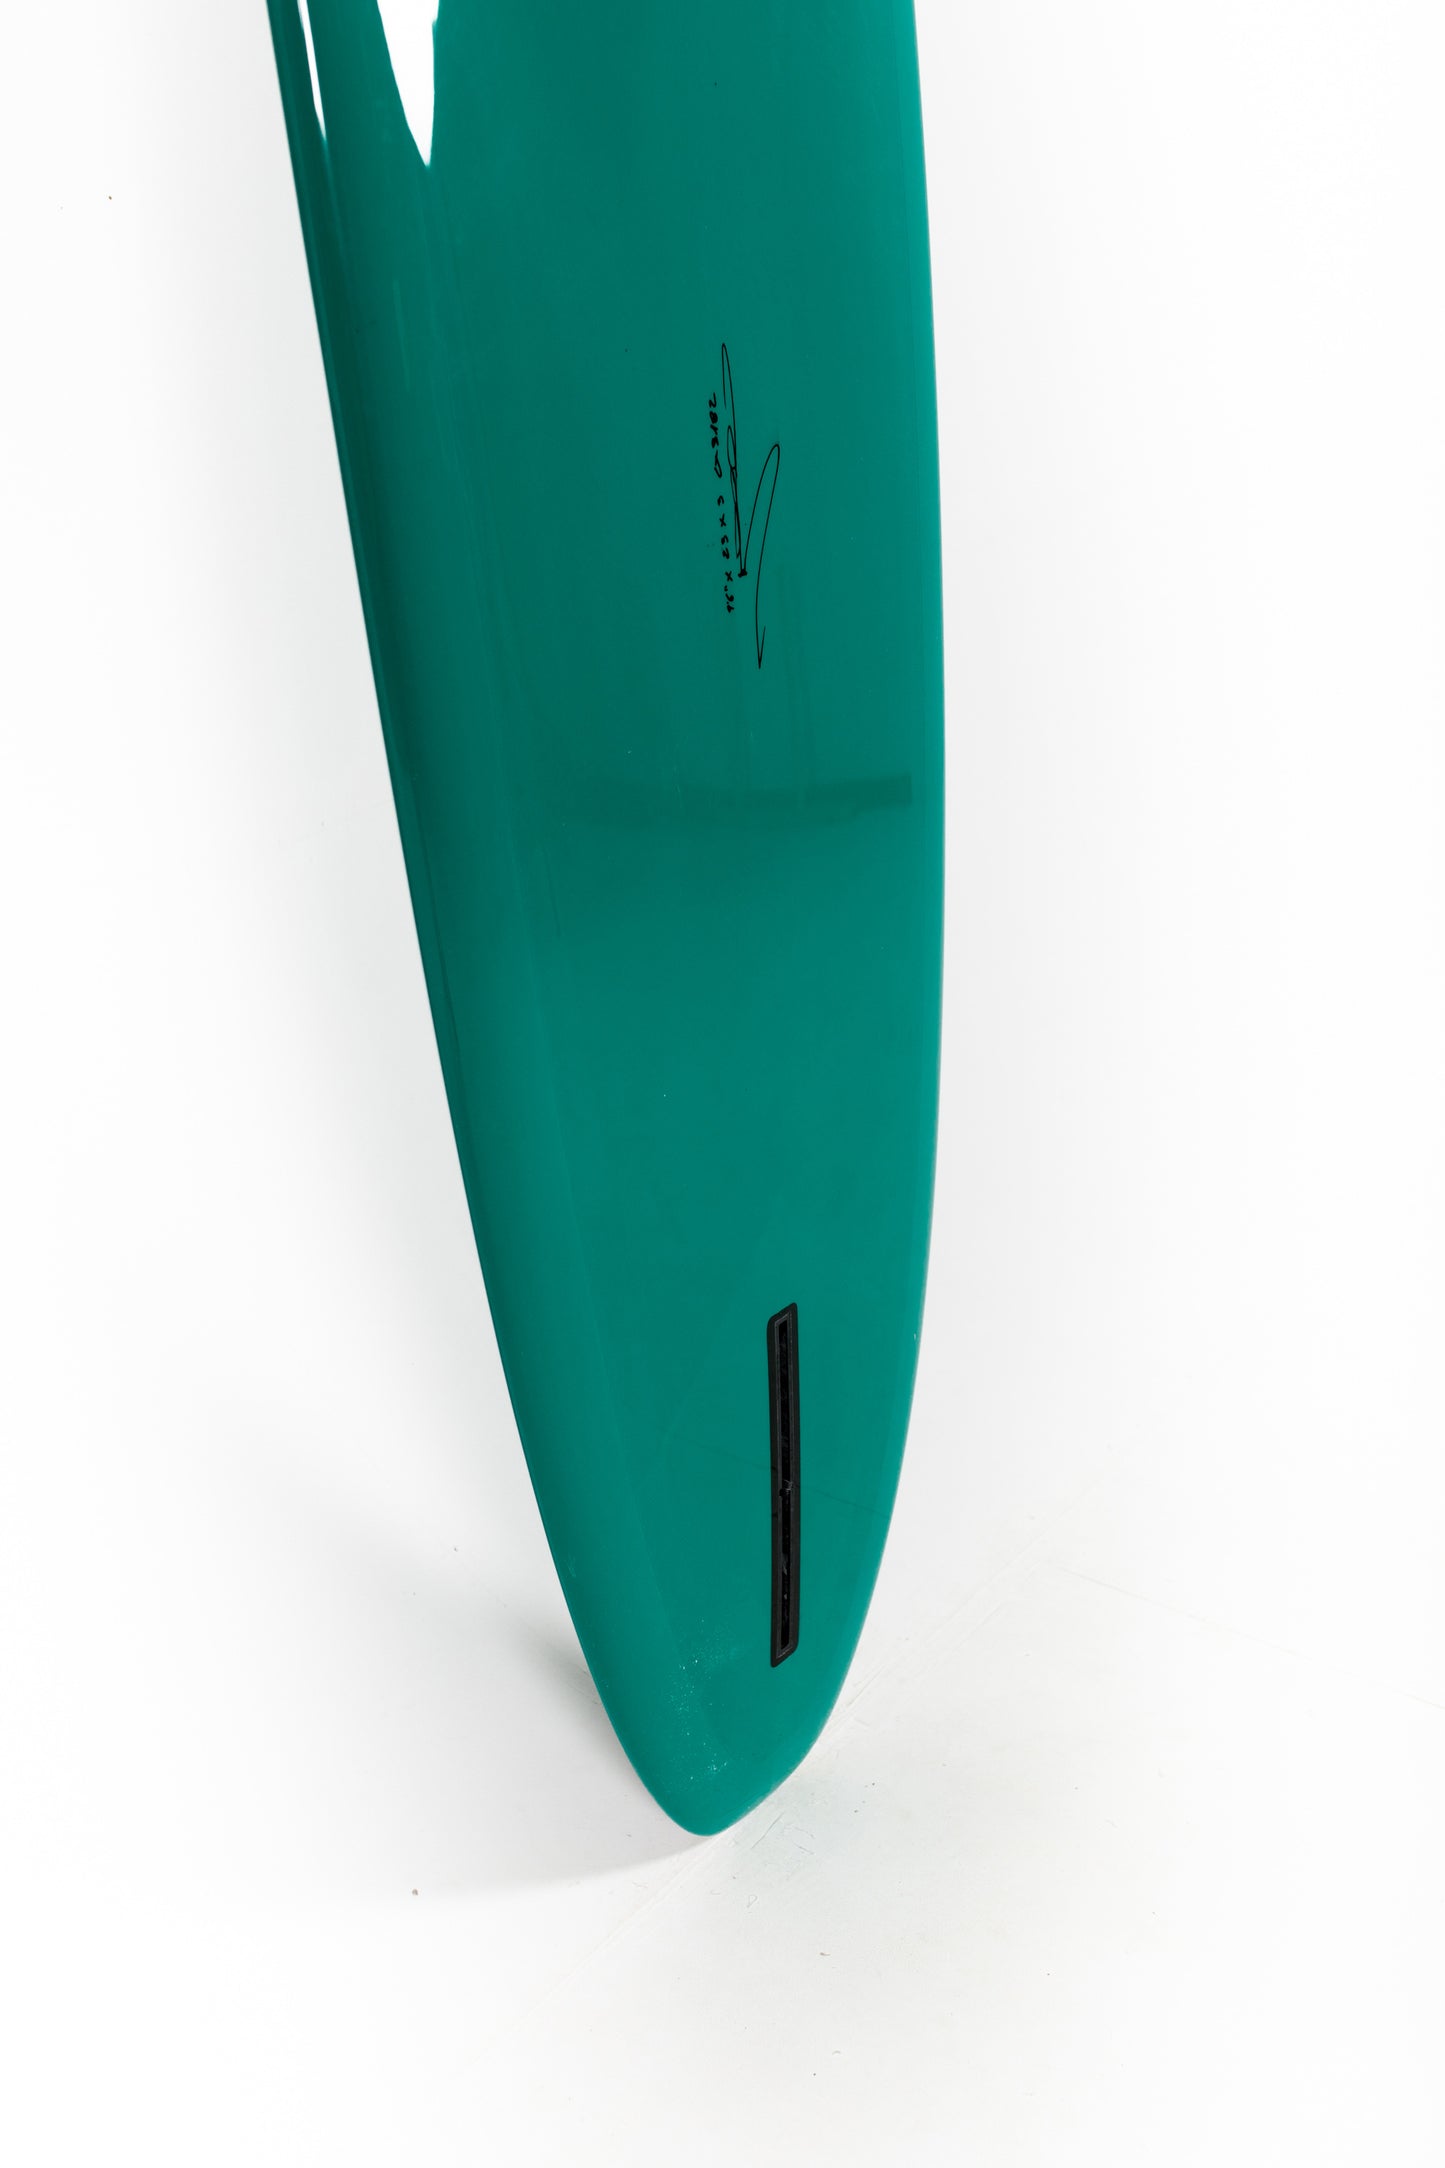 
                  
                    Pukas Surf Shop - Christenson Surfboard  - BANDITO by Chris Christenson - 9'6” x 23 x 3 - CX0312
                  
                